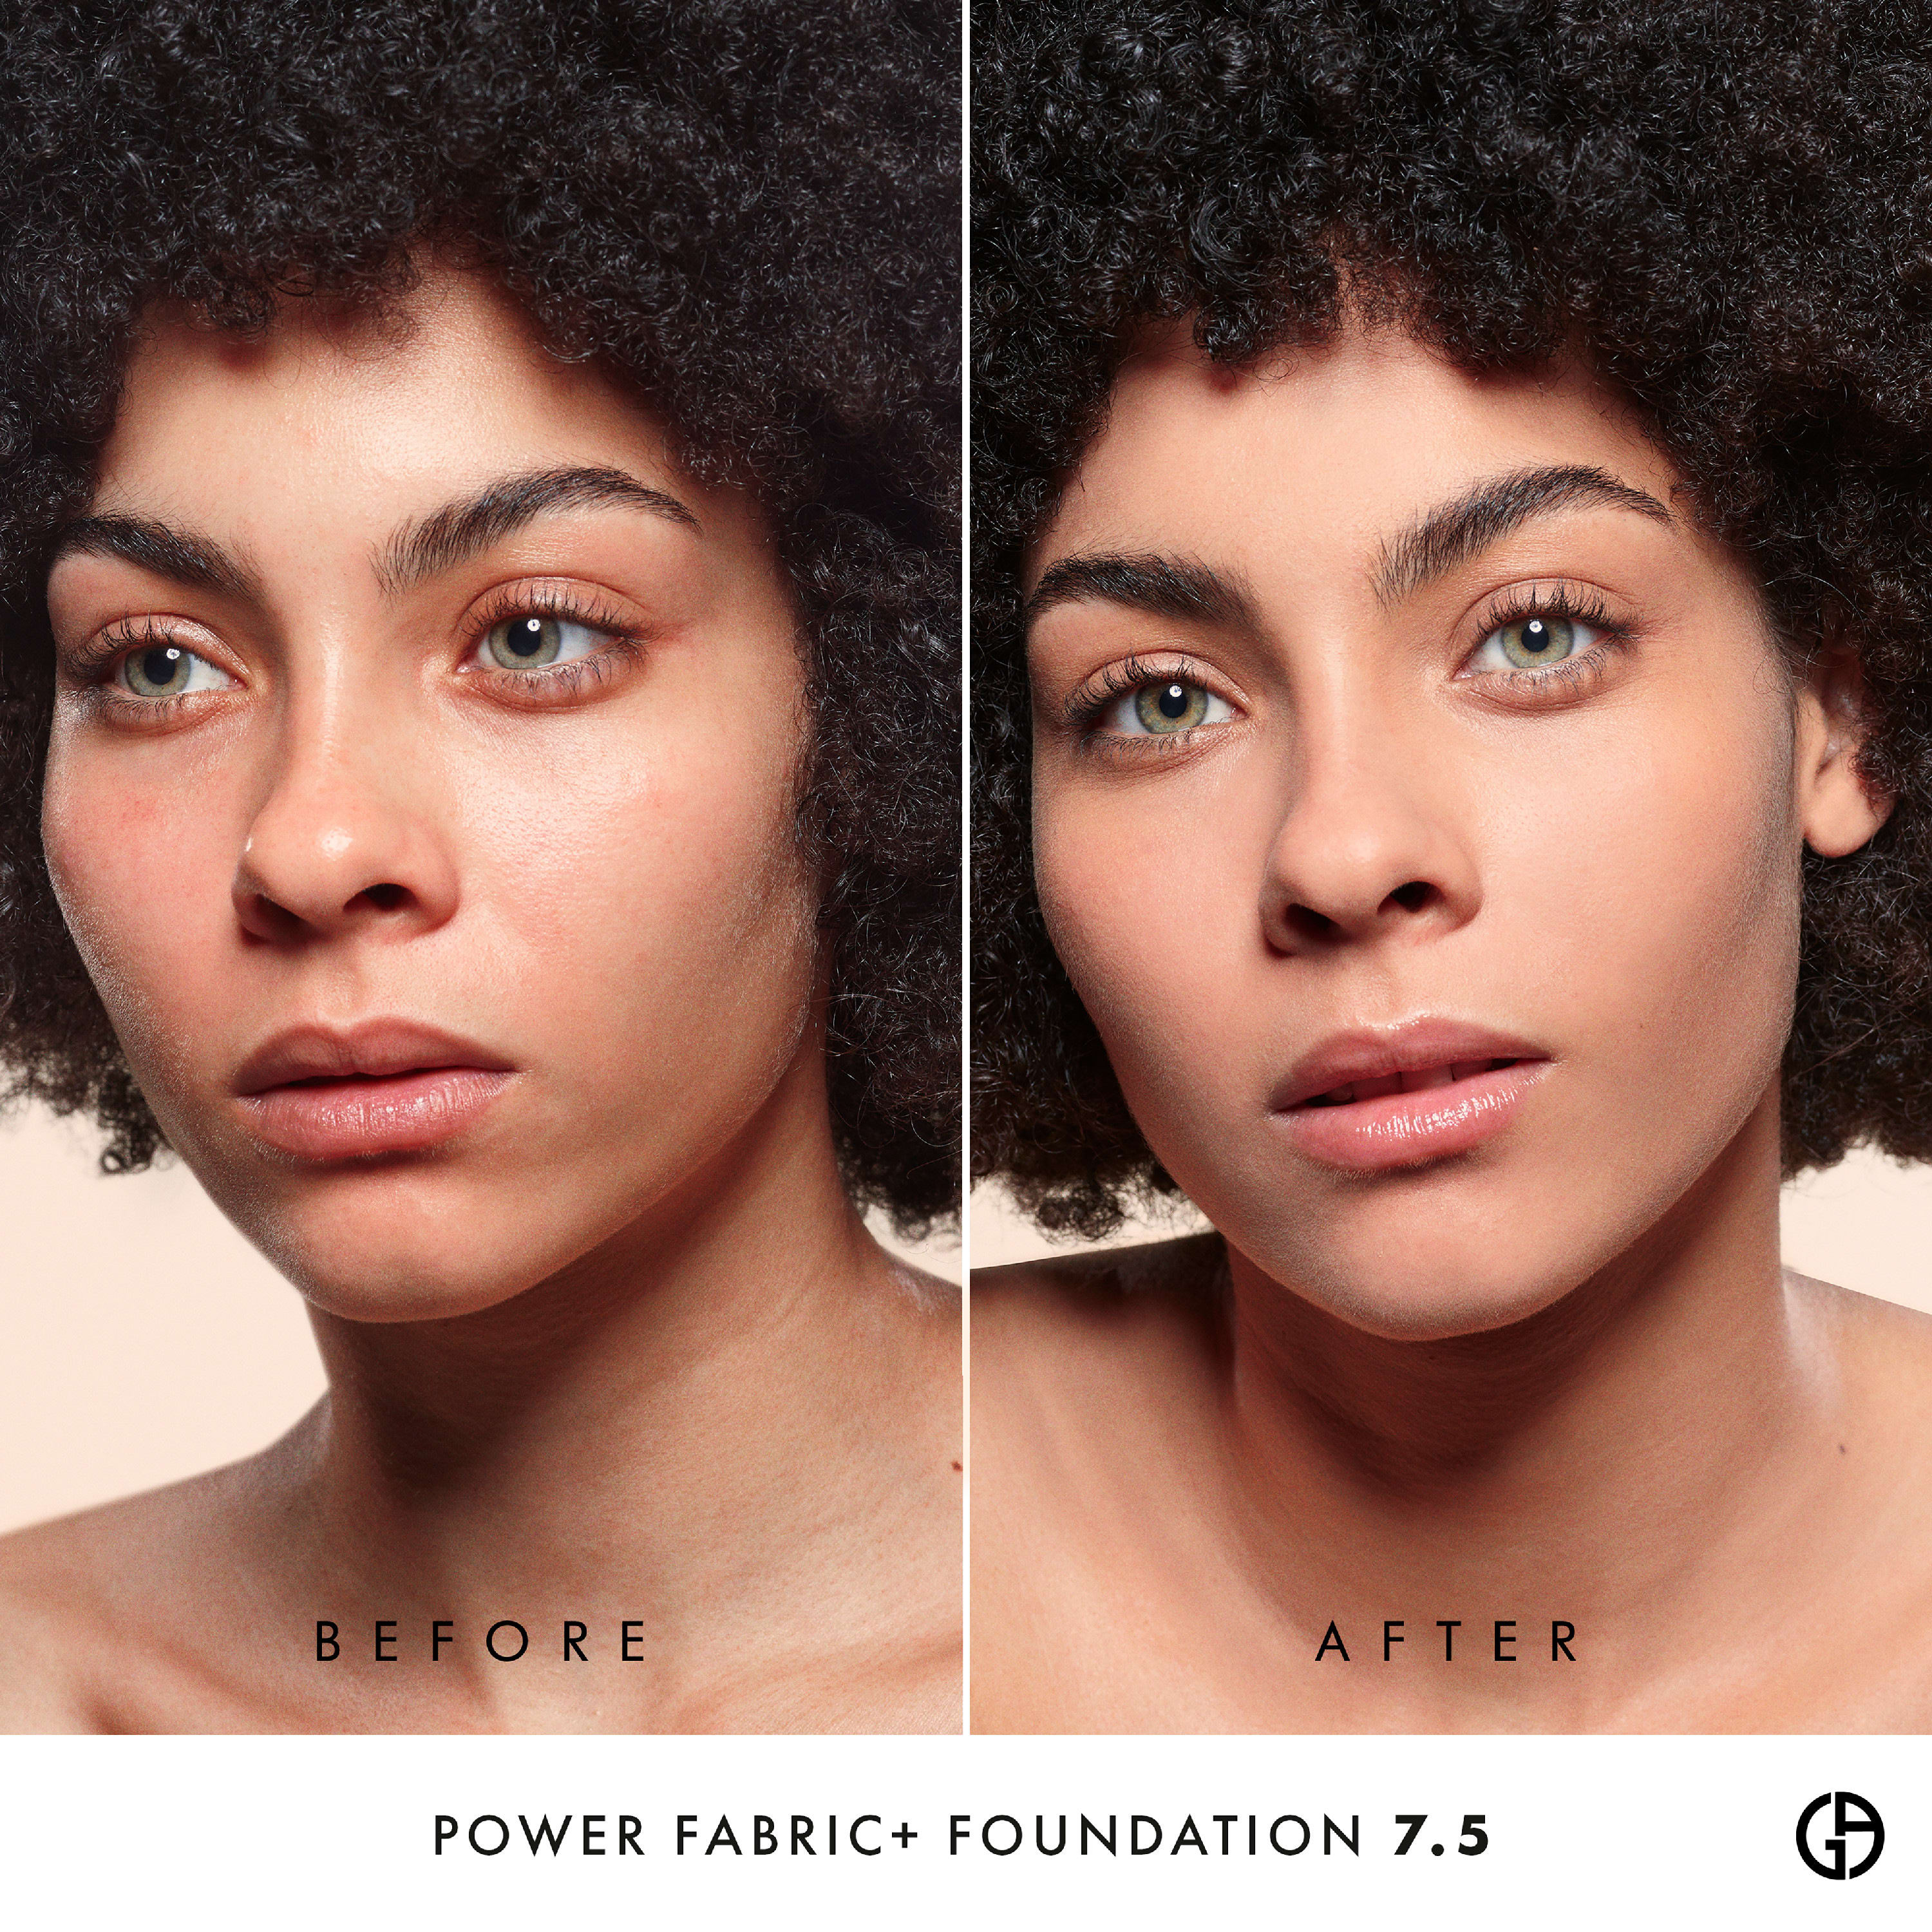 Power Fabric+ Foundation, 7.5